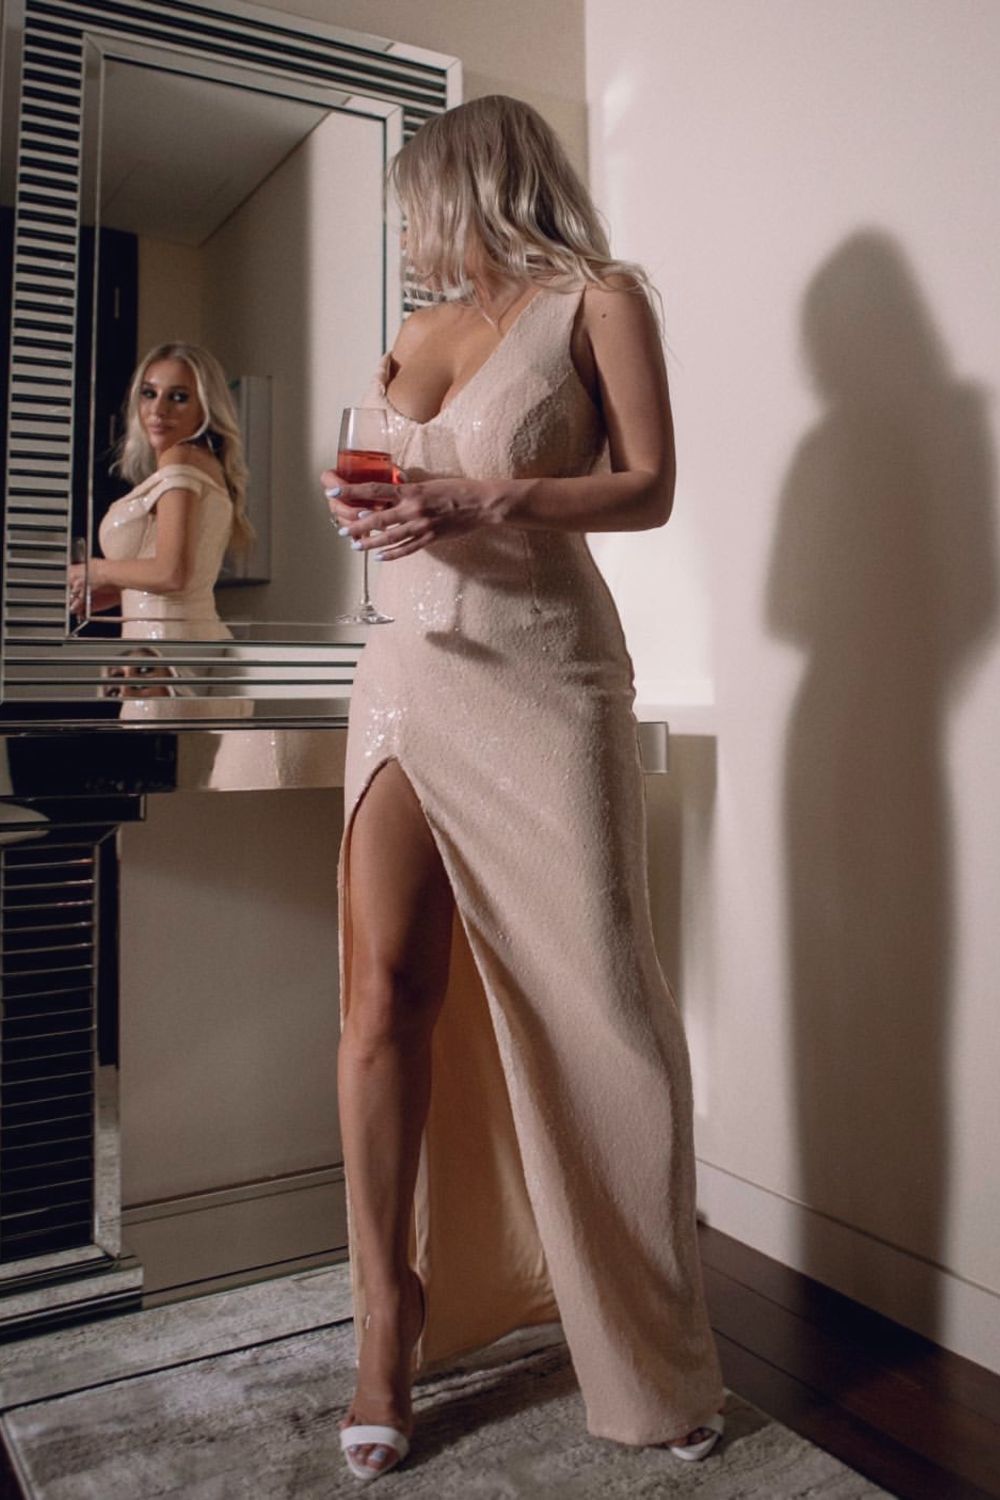 Marilyn Champagne Sequin Off The Shoulder Maxi Slit Dress